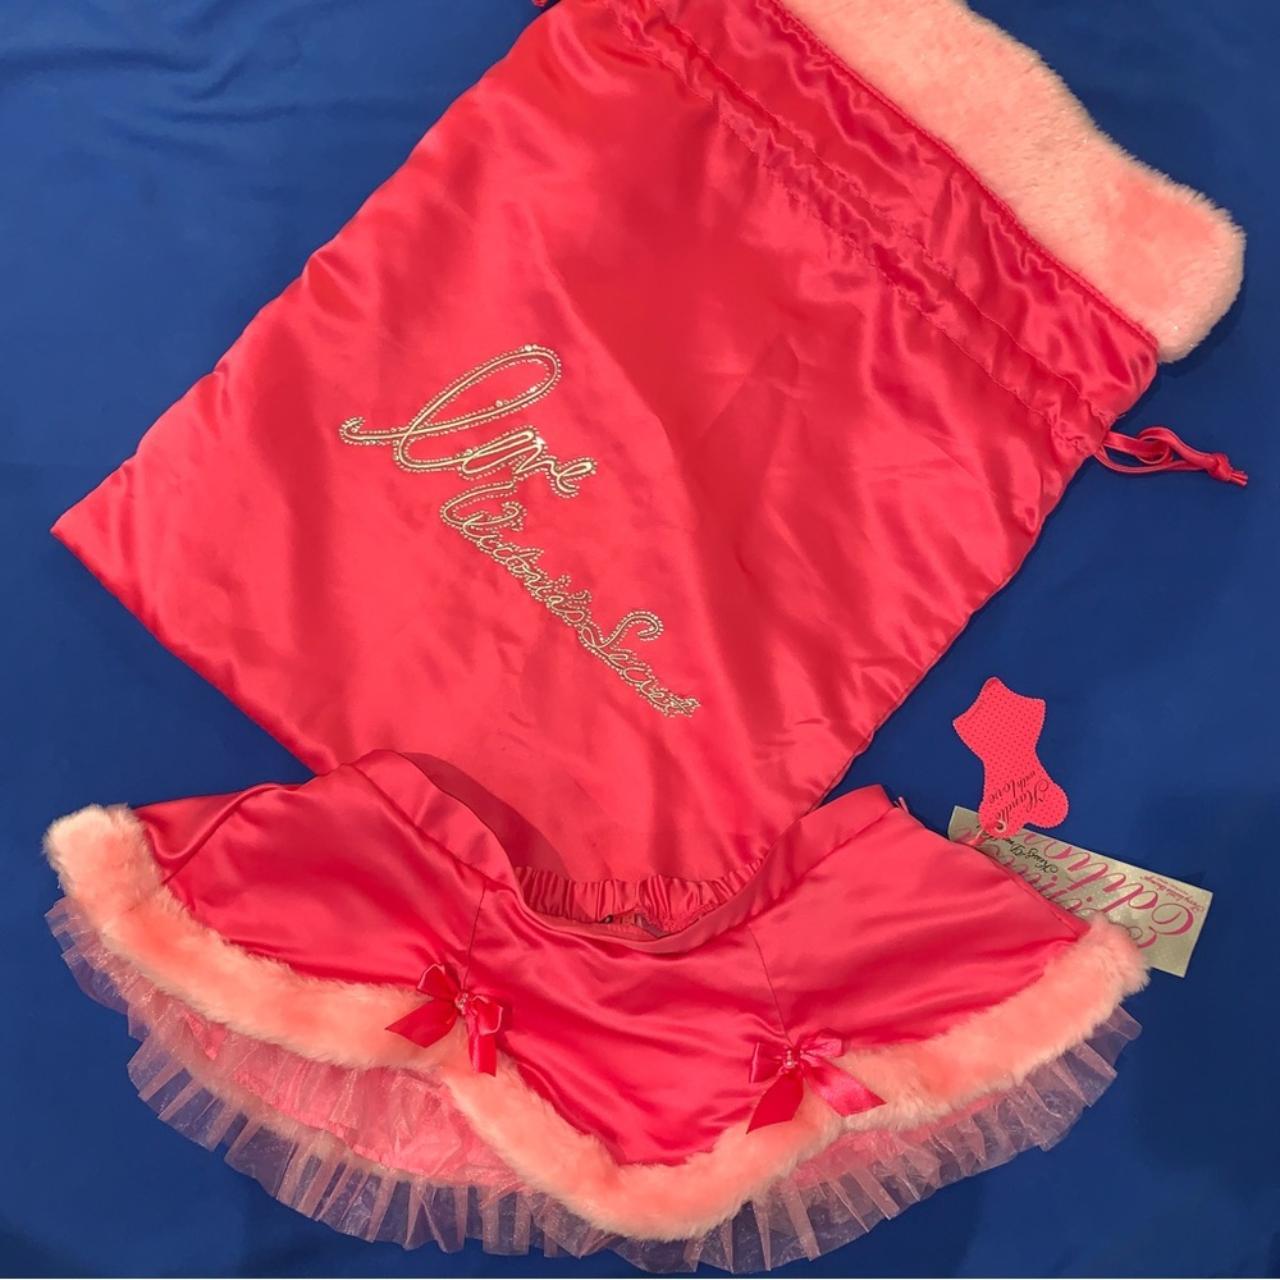 Victoria's Secret Women's Pink Skirt | Depop